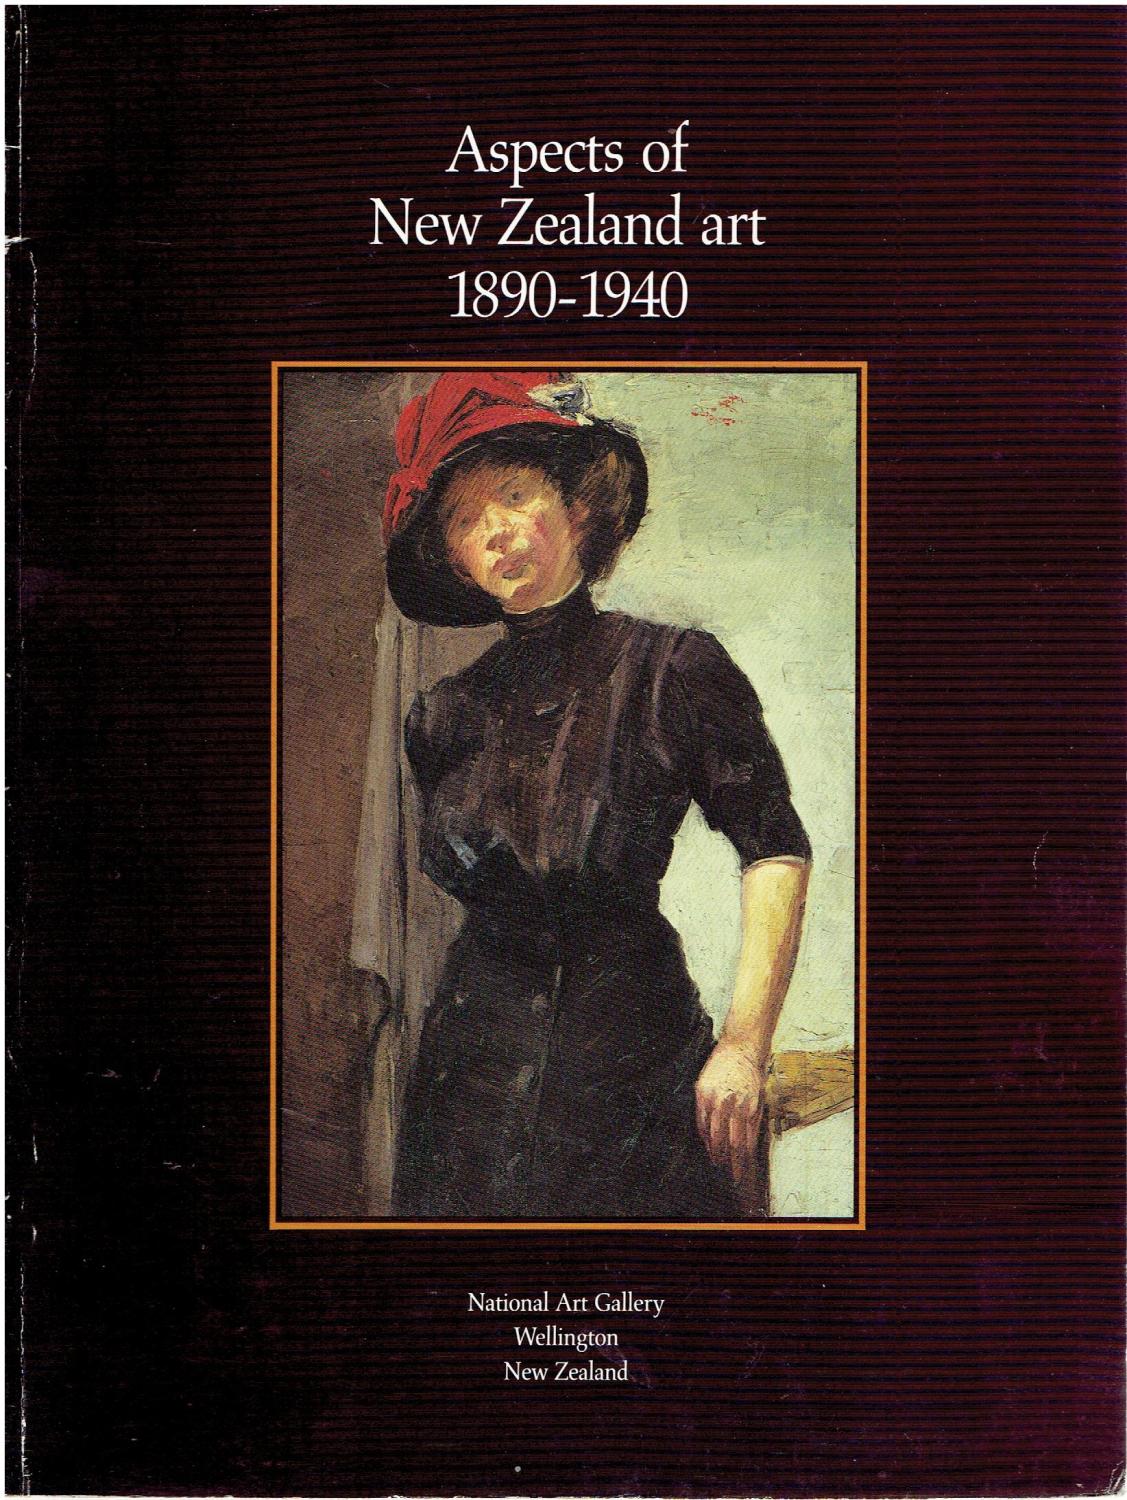 Aspects of New Zealand art 1890-1940